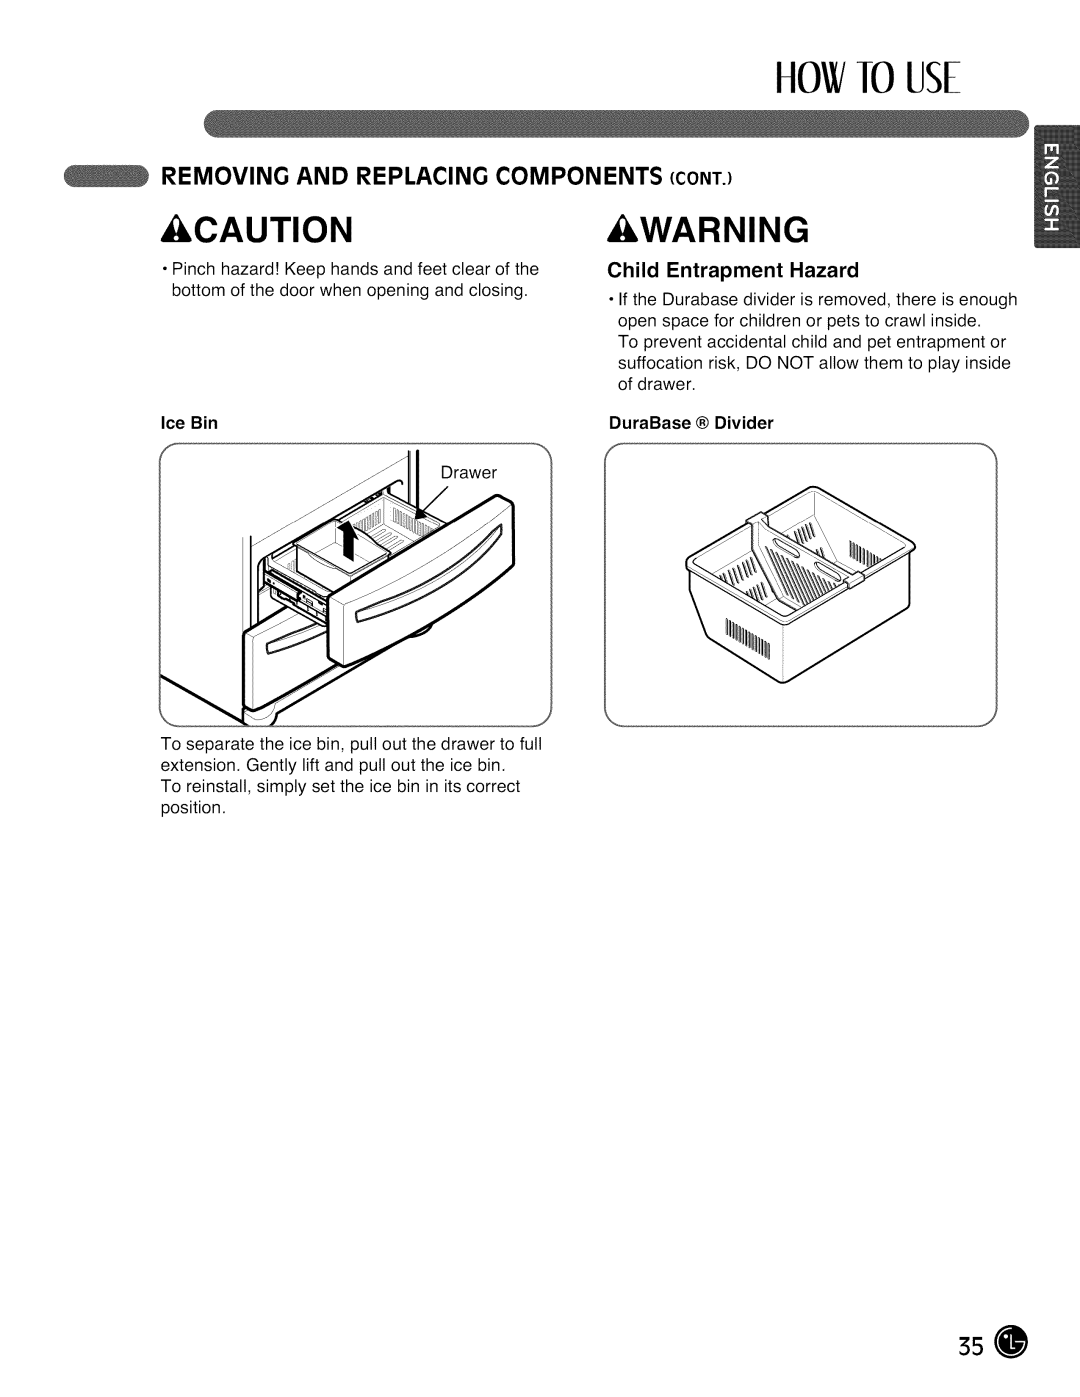 LG Electronics LMX28988 manual Child Entrapment Hazard, Ice Bin, DuraBase Divider, ttOW10 USE, Caution, Warning 